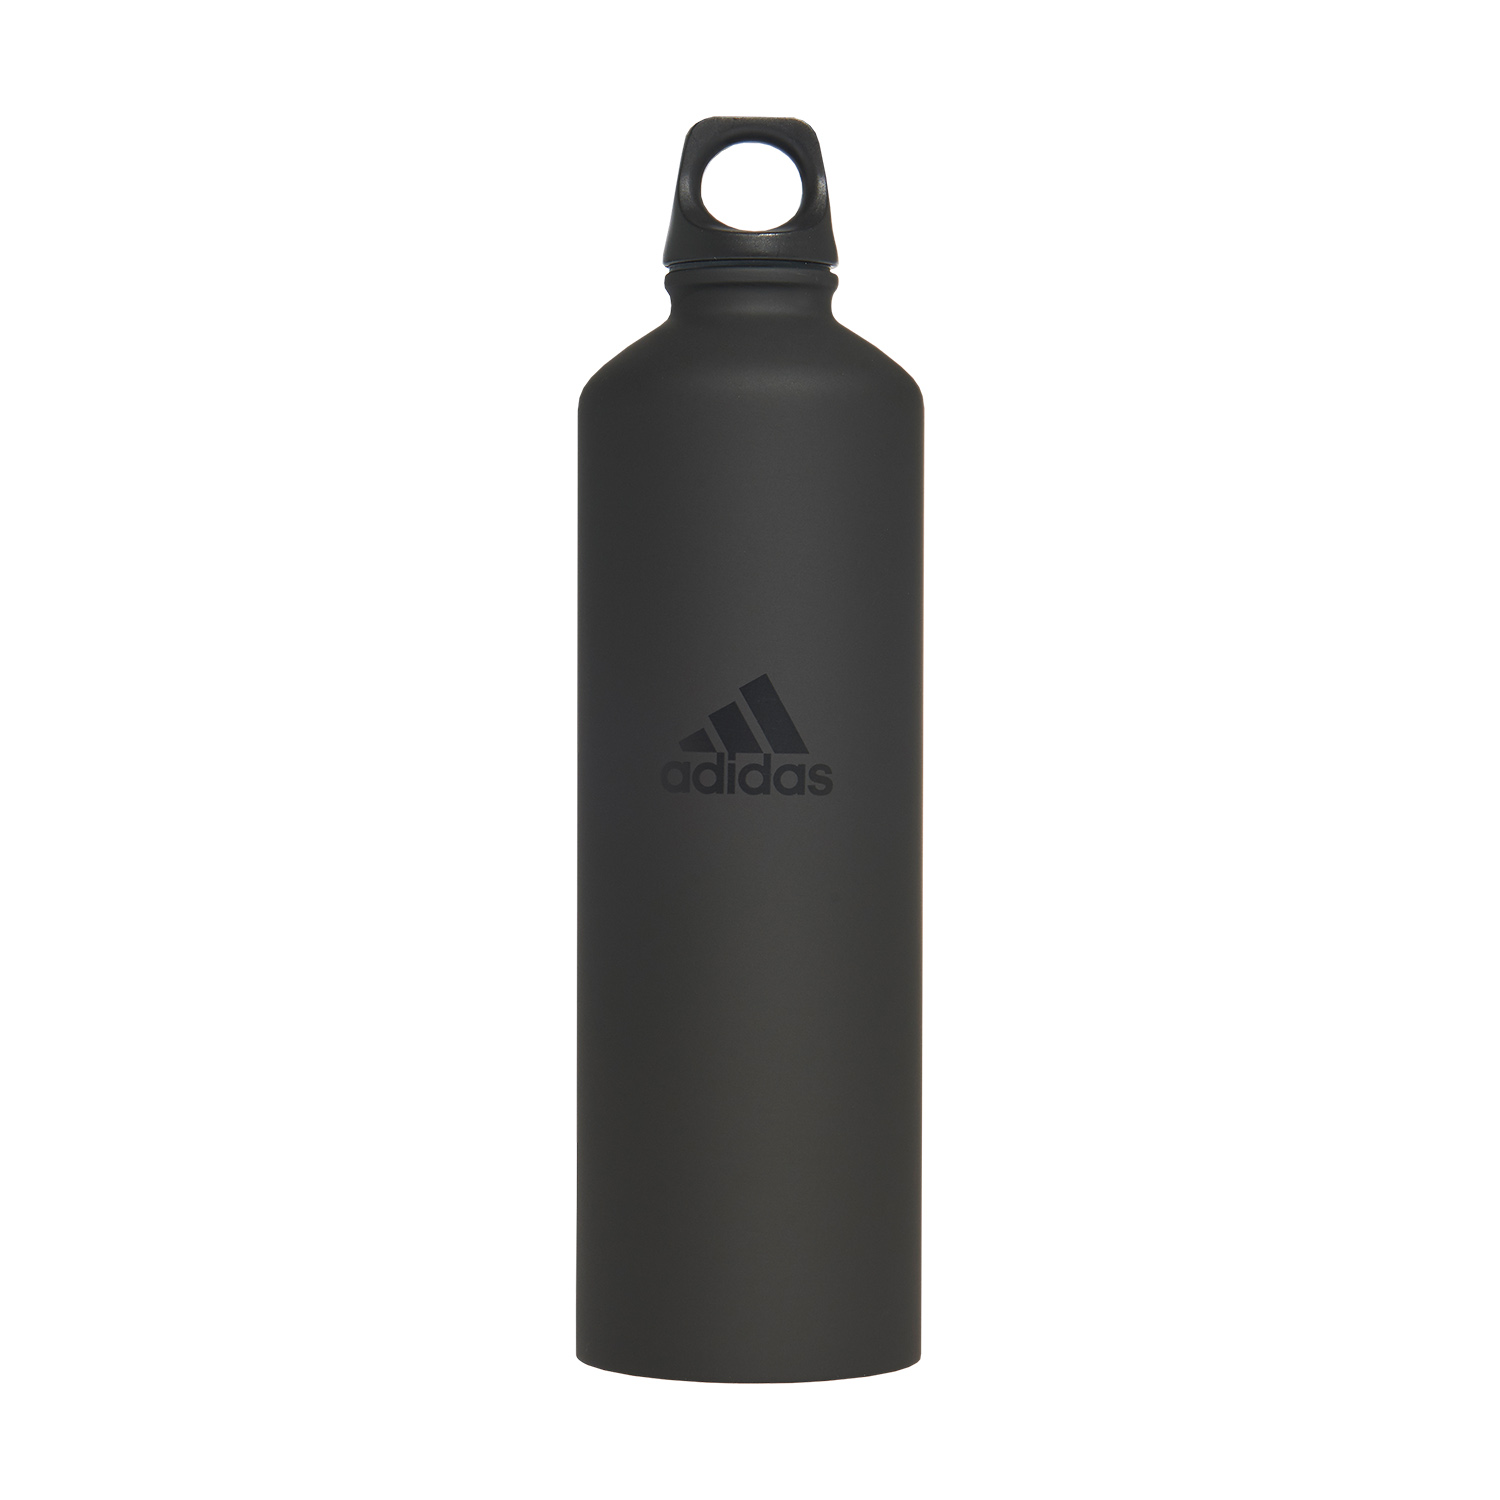 adidas Steel 750 ml Water bottle - Black